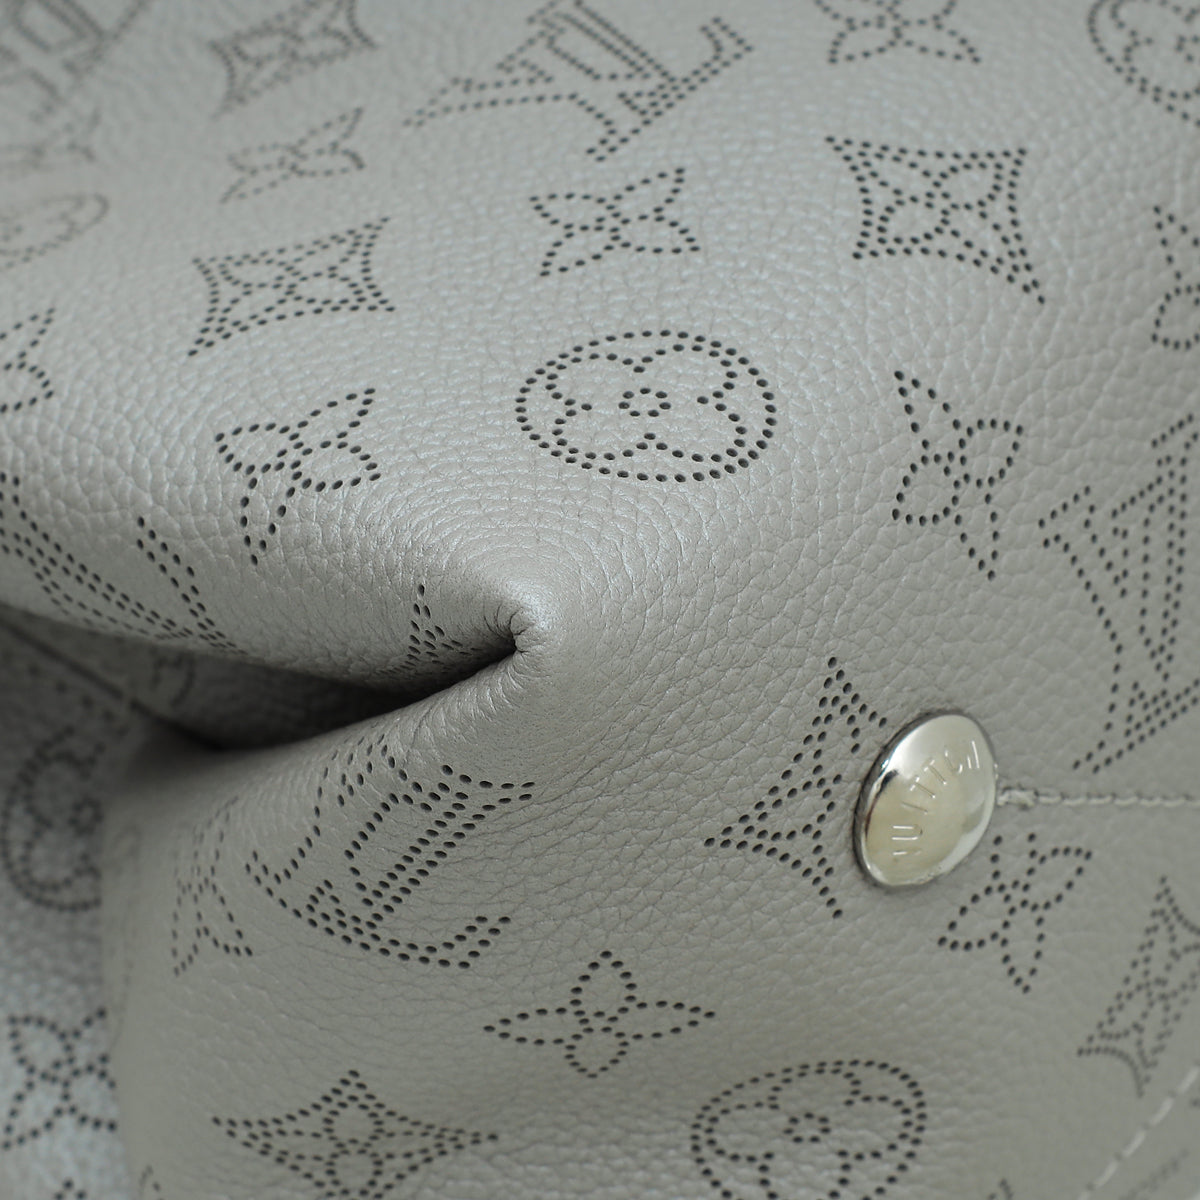 Louis Vuitton Gris Souris Monogram Mahina Leather Bella Bucket Bag